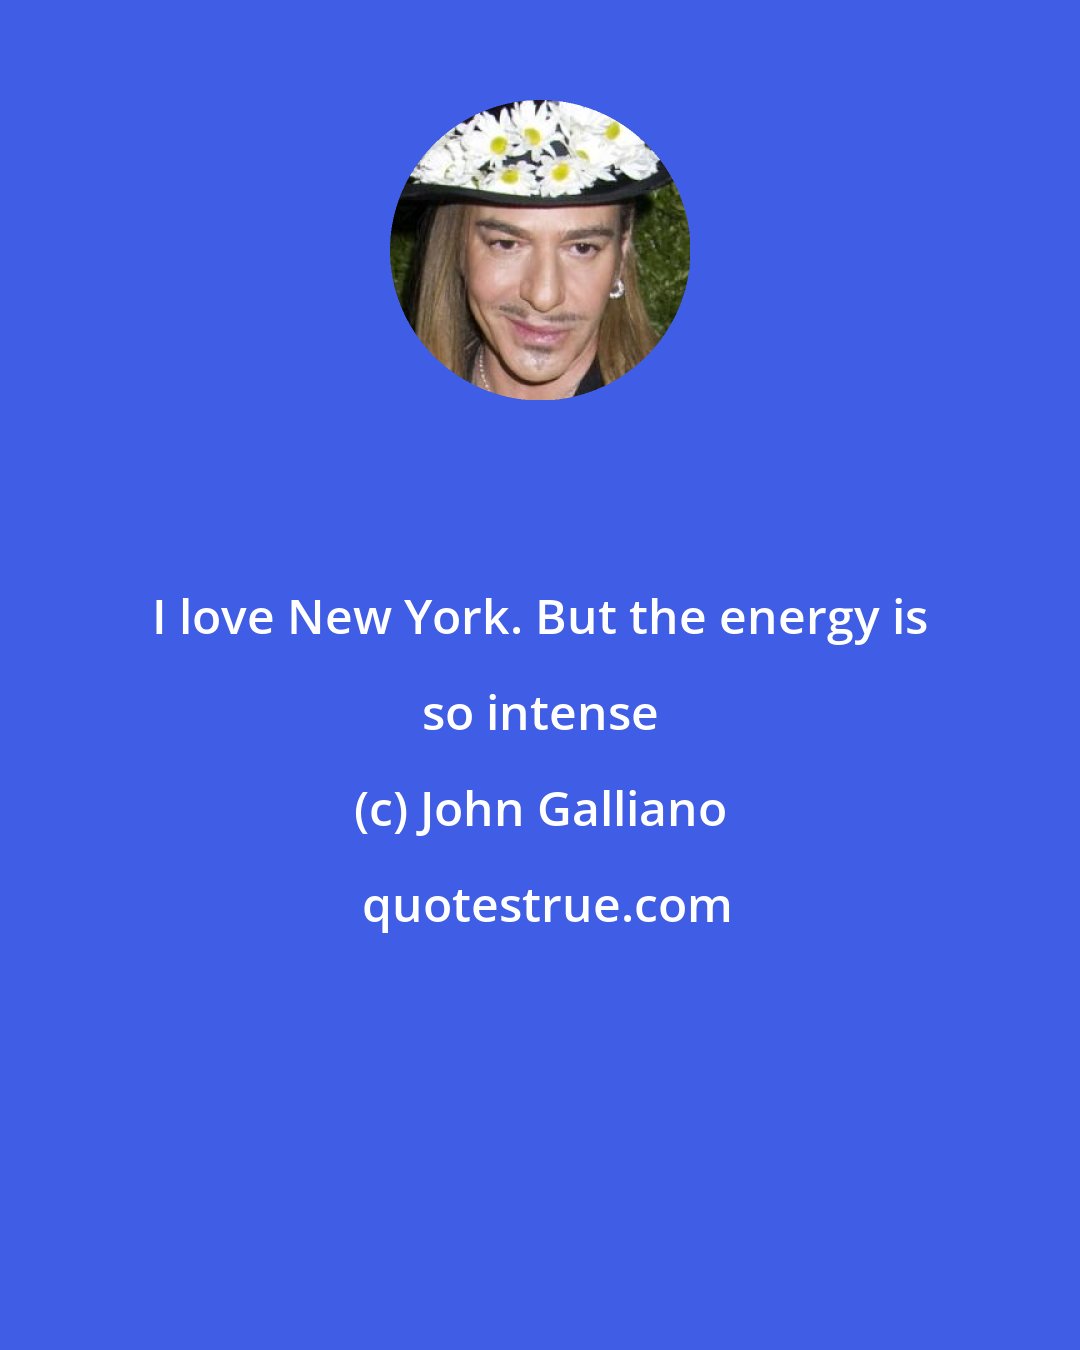 John Galliano: I love New York. But the energy is so intense